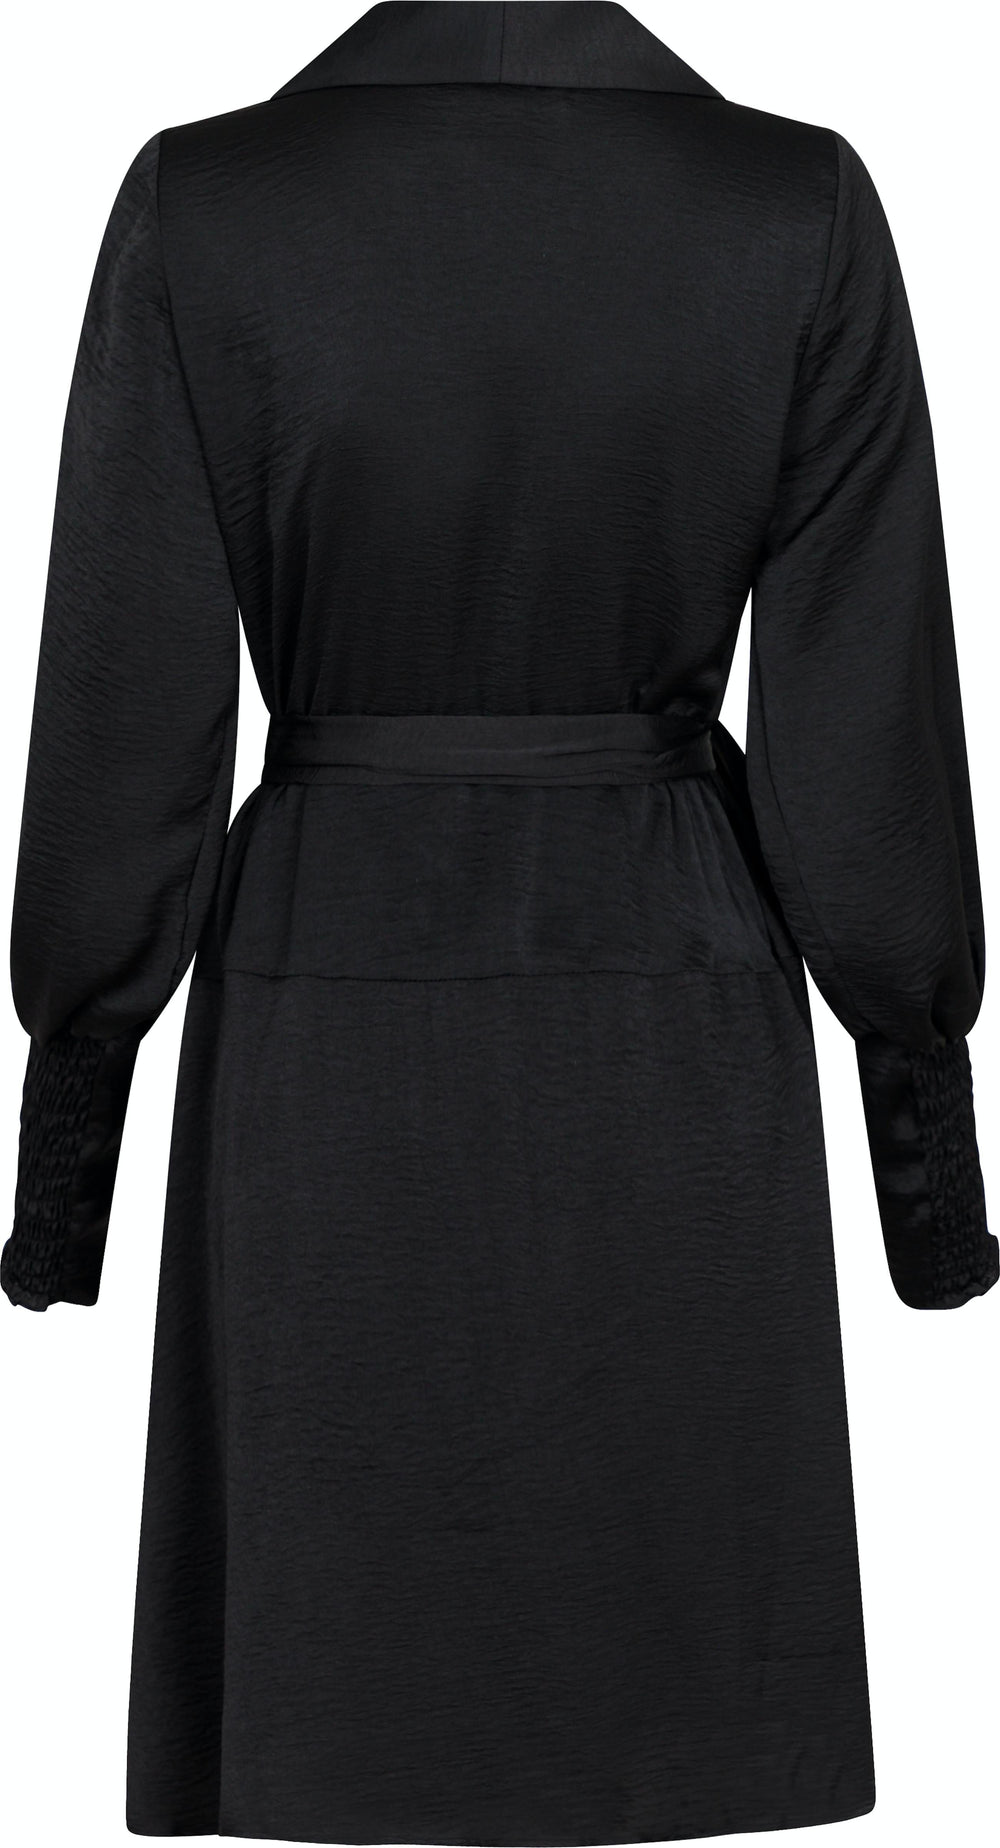 Neo Noir - Chanelle Dress - Black